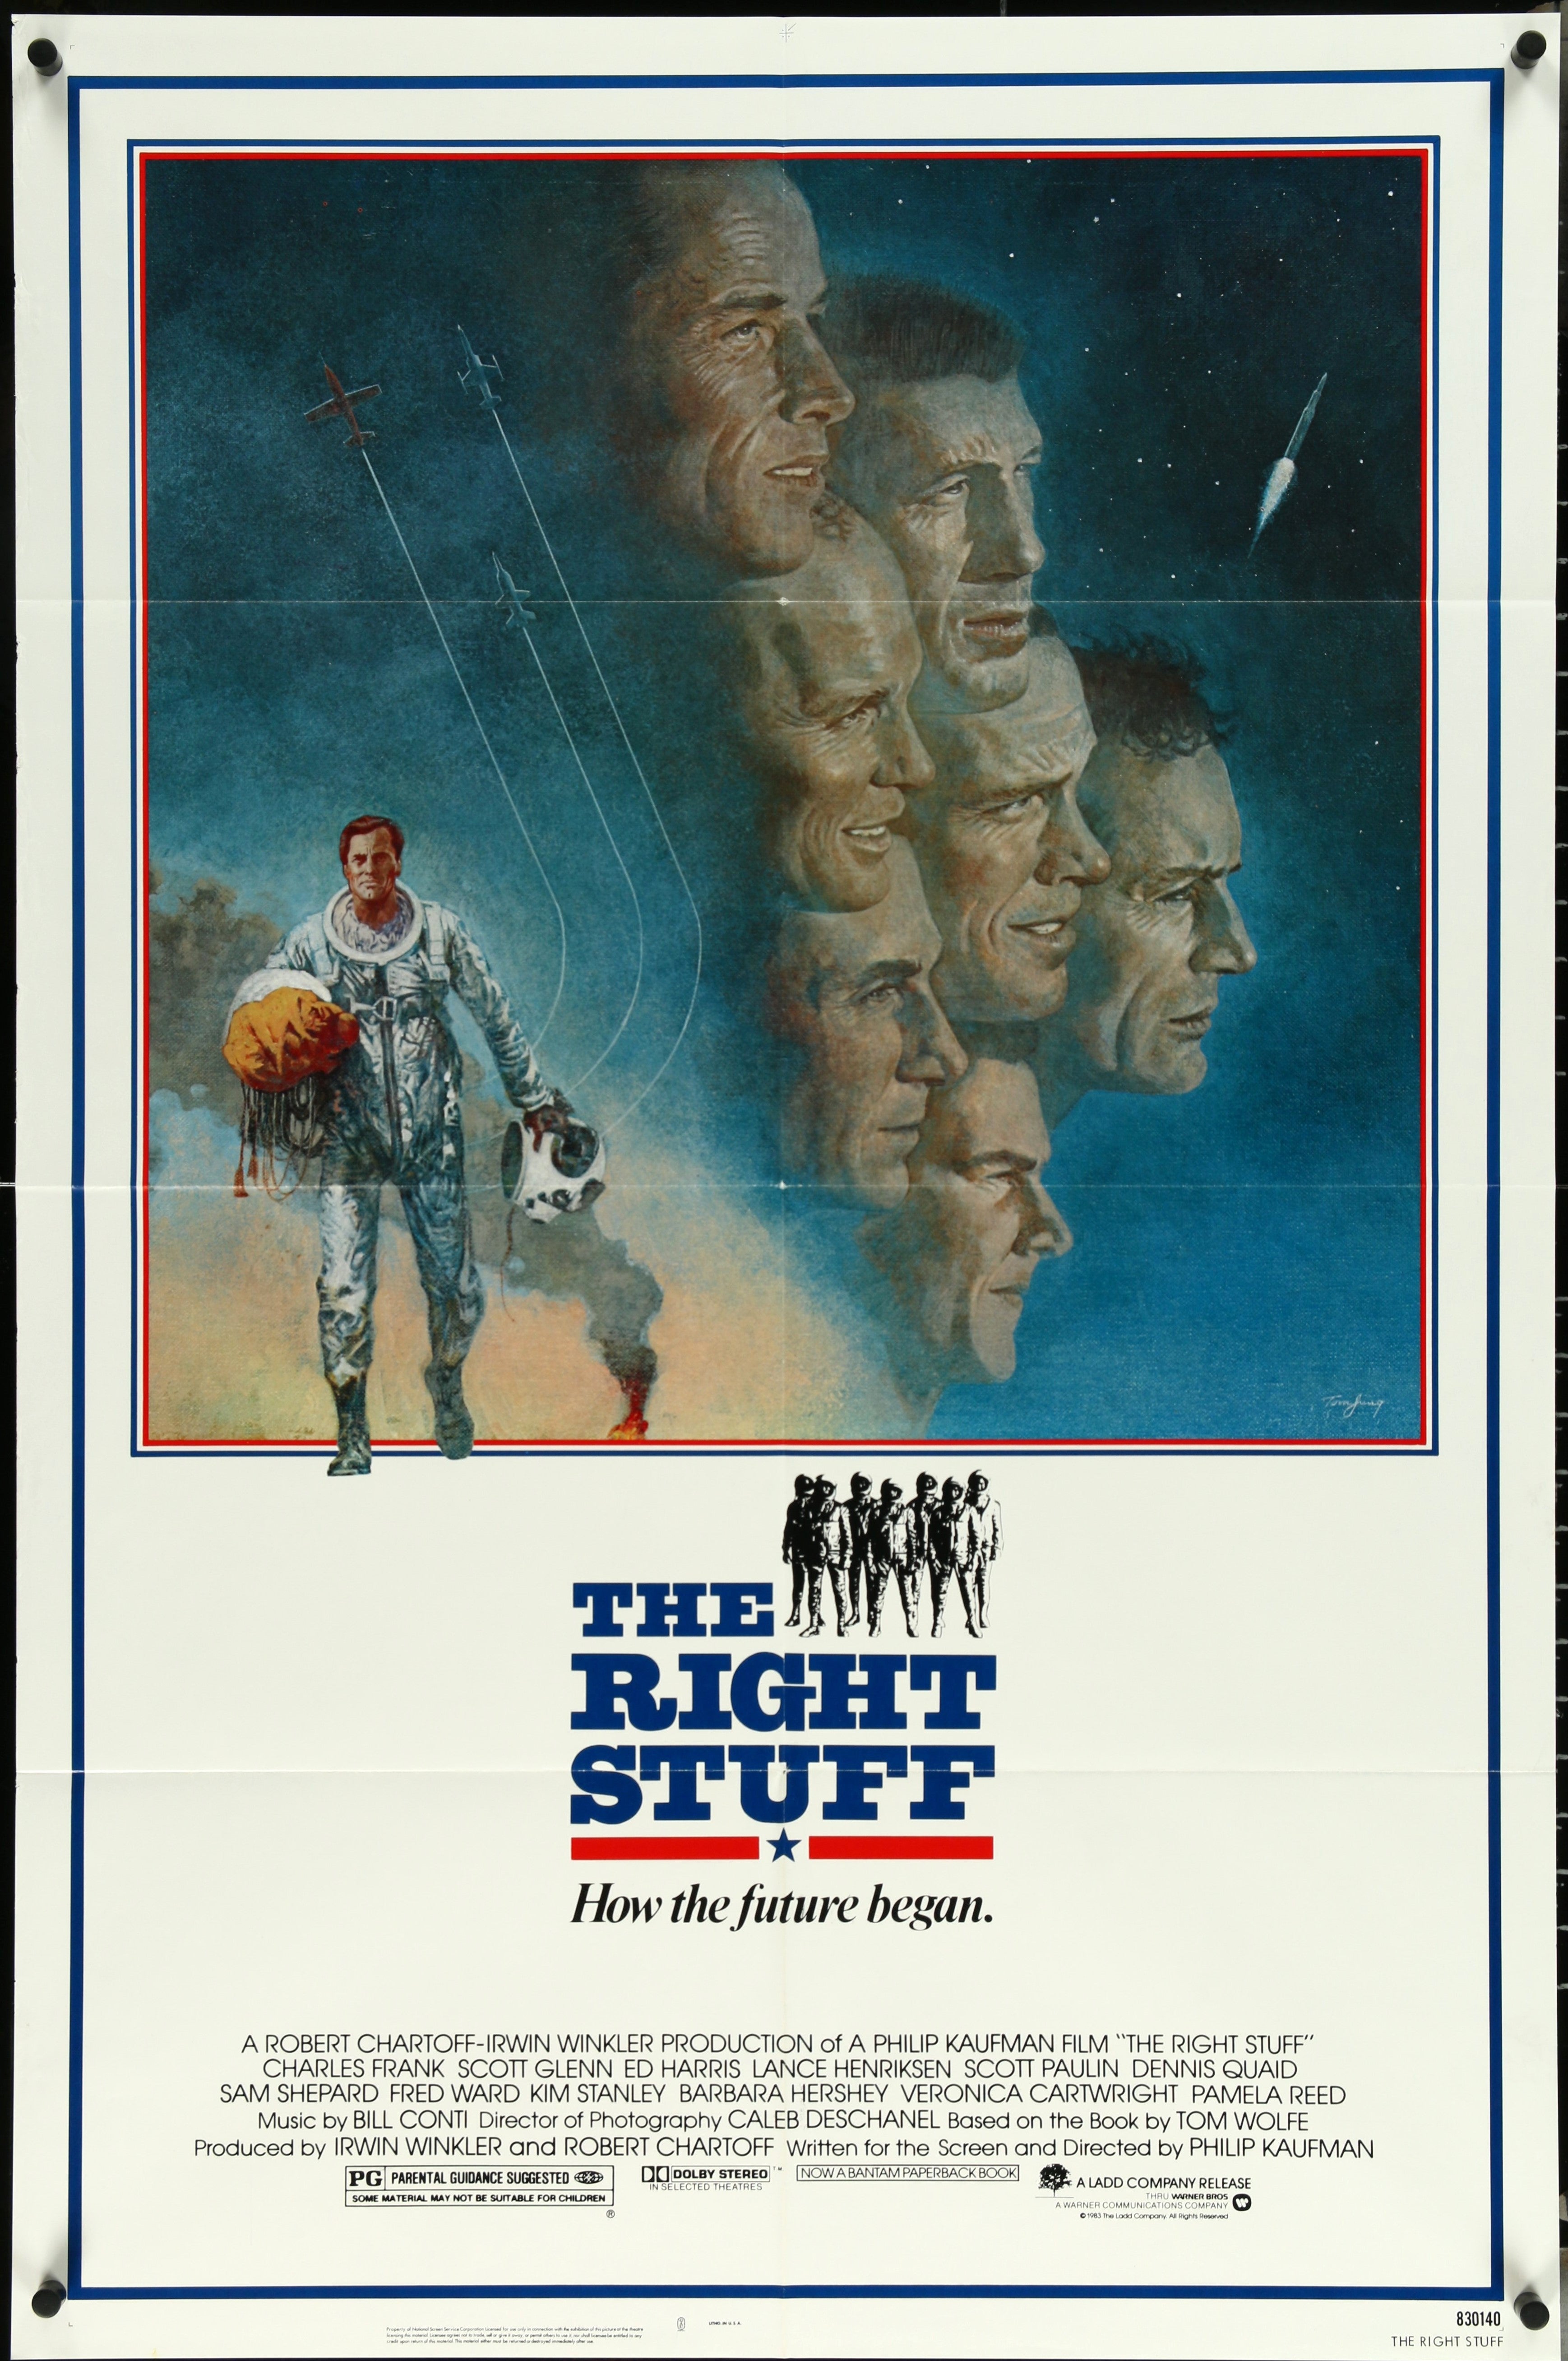 THE RIGHT STUFF (1983)